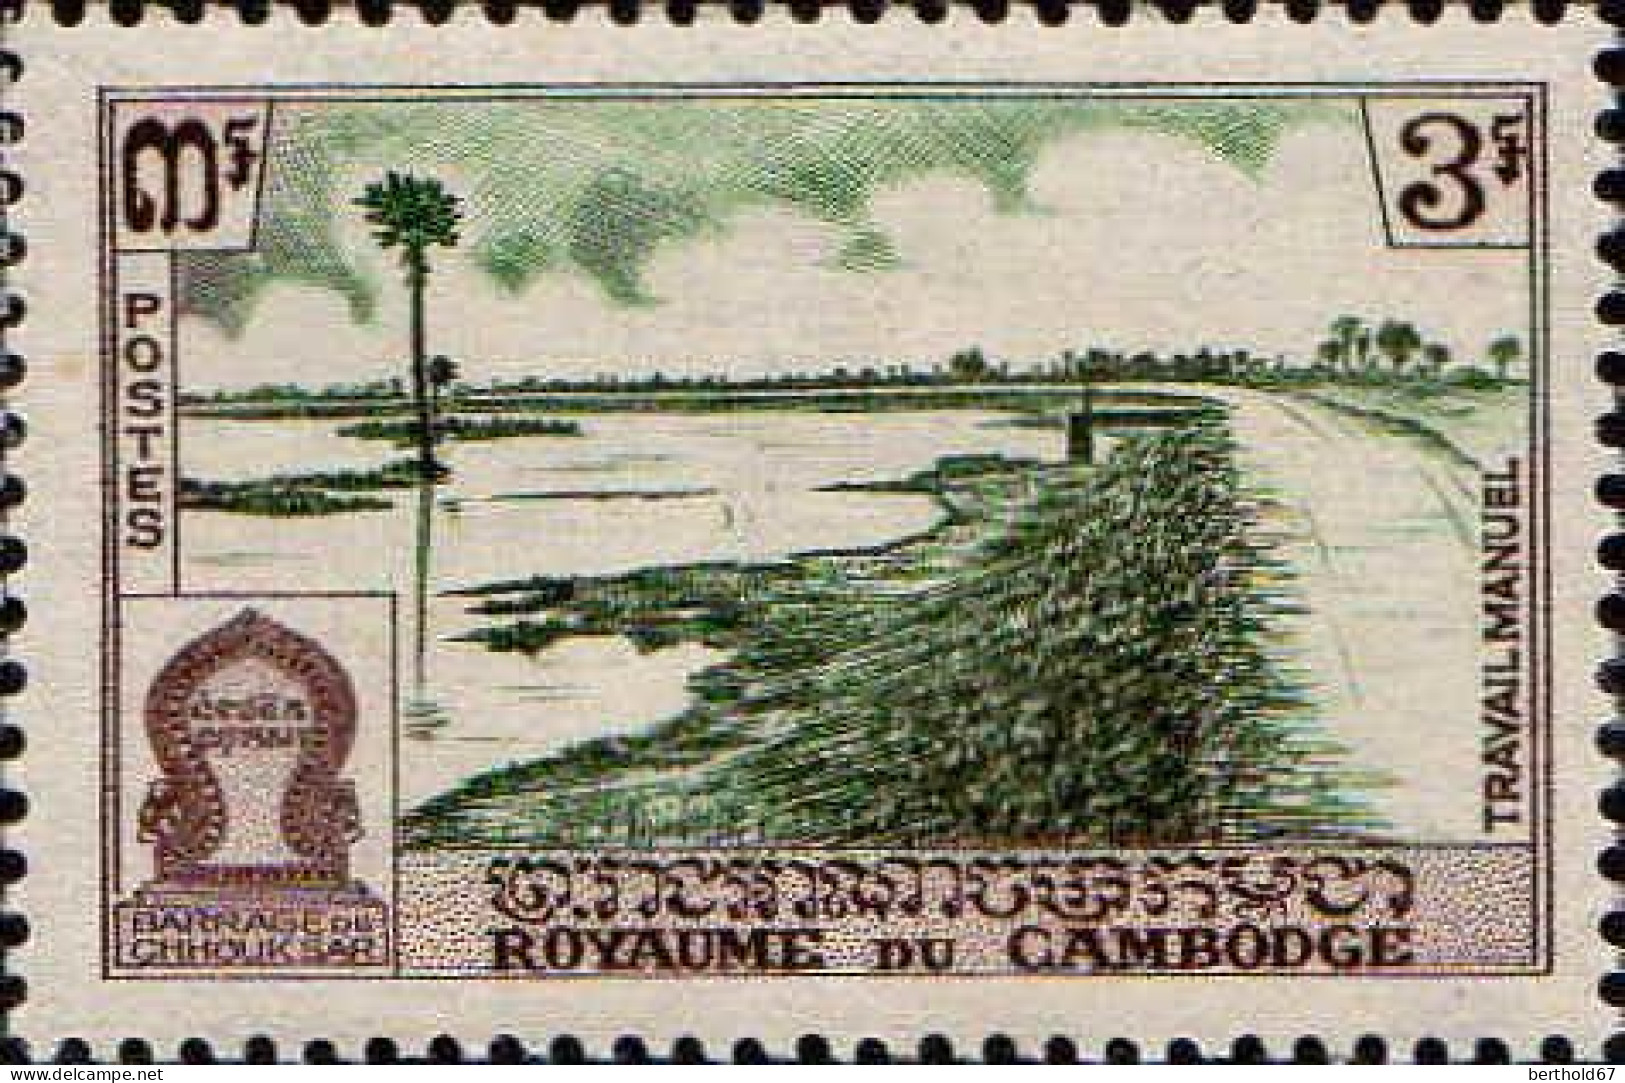 Cambodge Poste N** Yv:  92/97 Solidarité Oeuvres De Sangkum - Cambodia